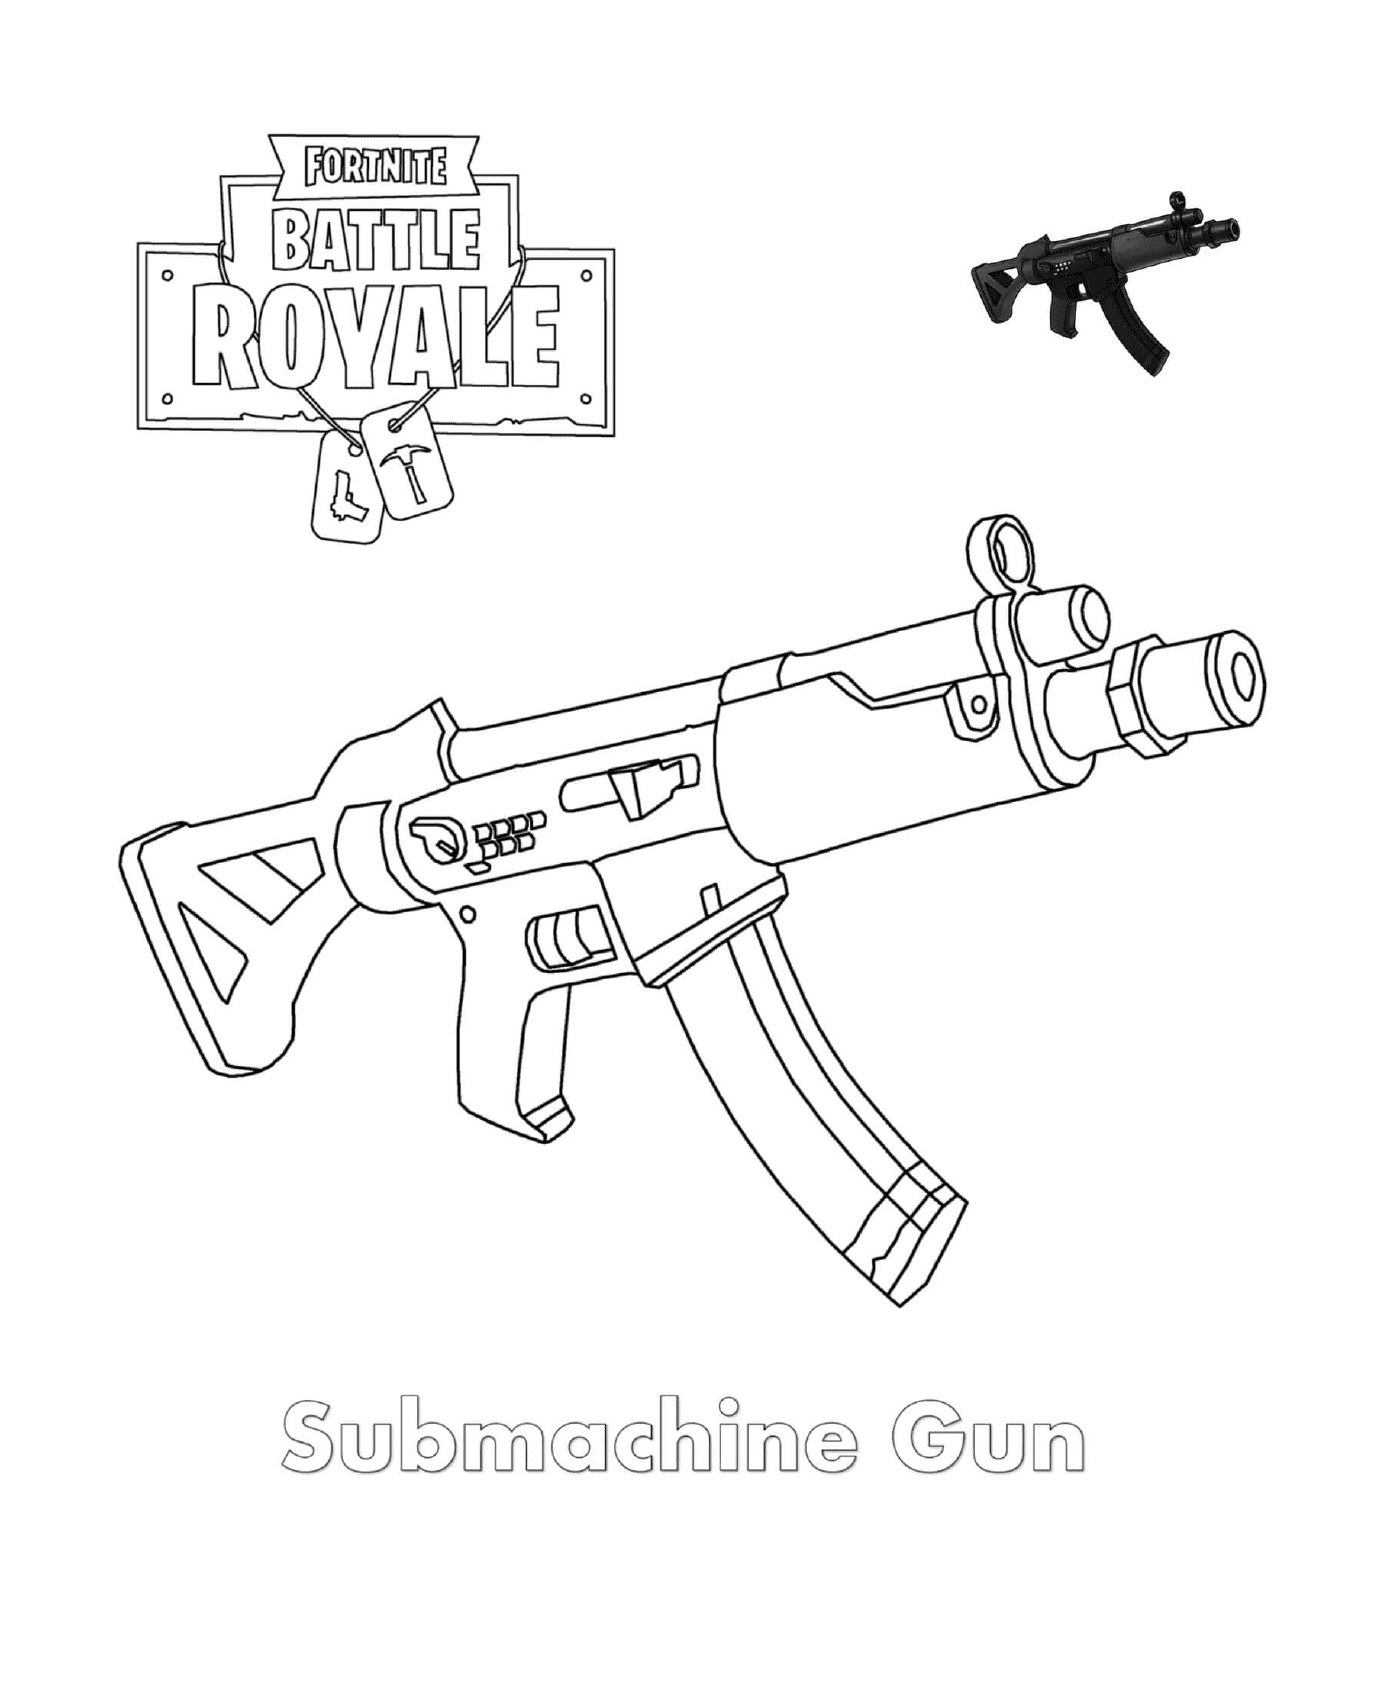  Submachine gun in Fortnite 